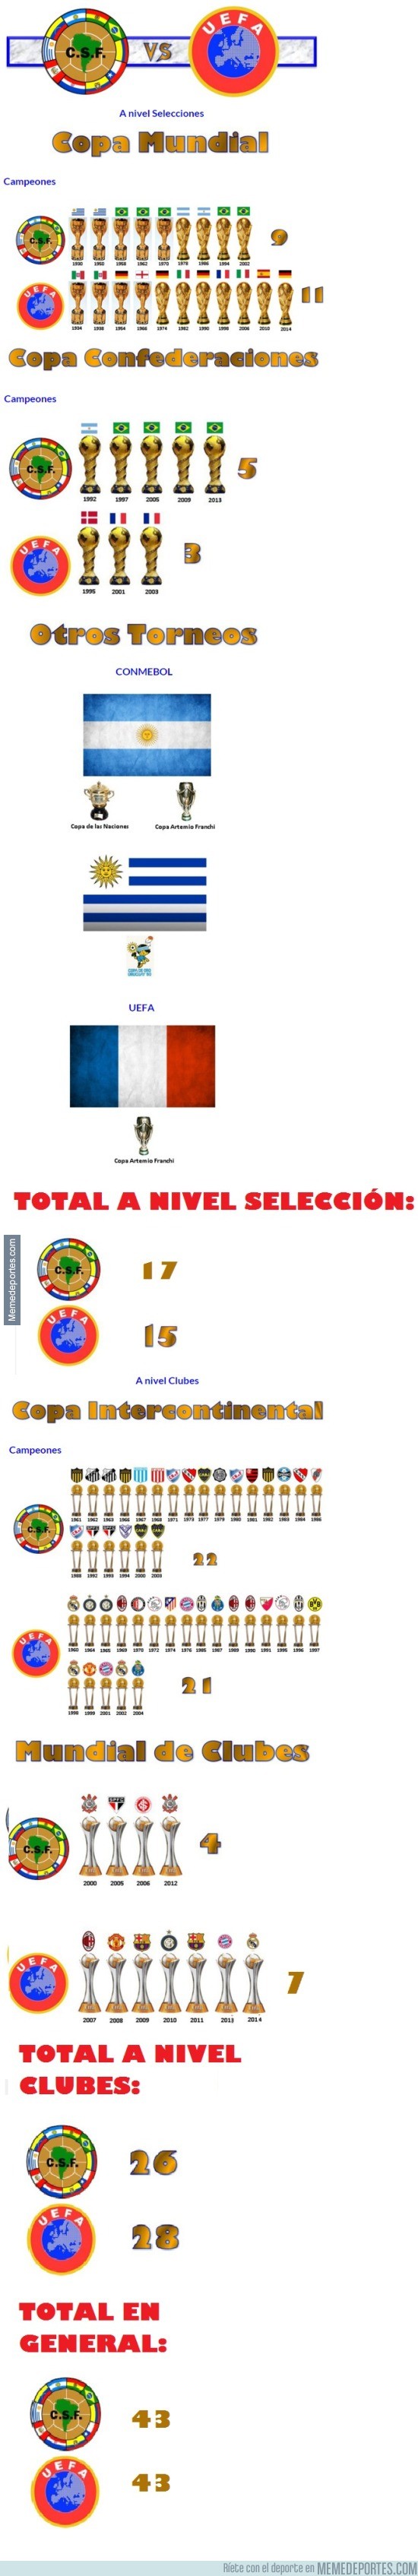 759442 - CONMEBOL Vs. UEFA